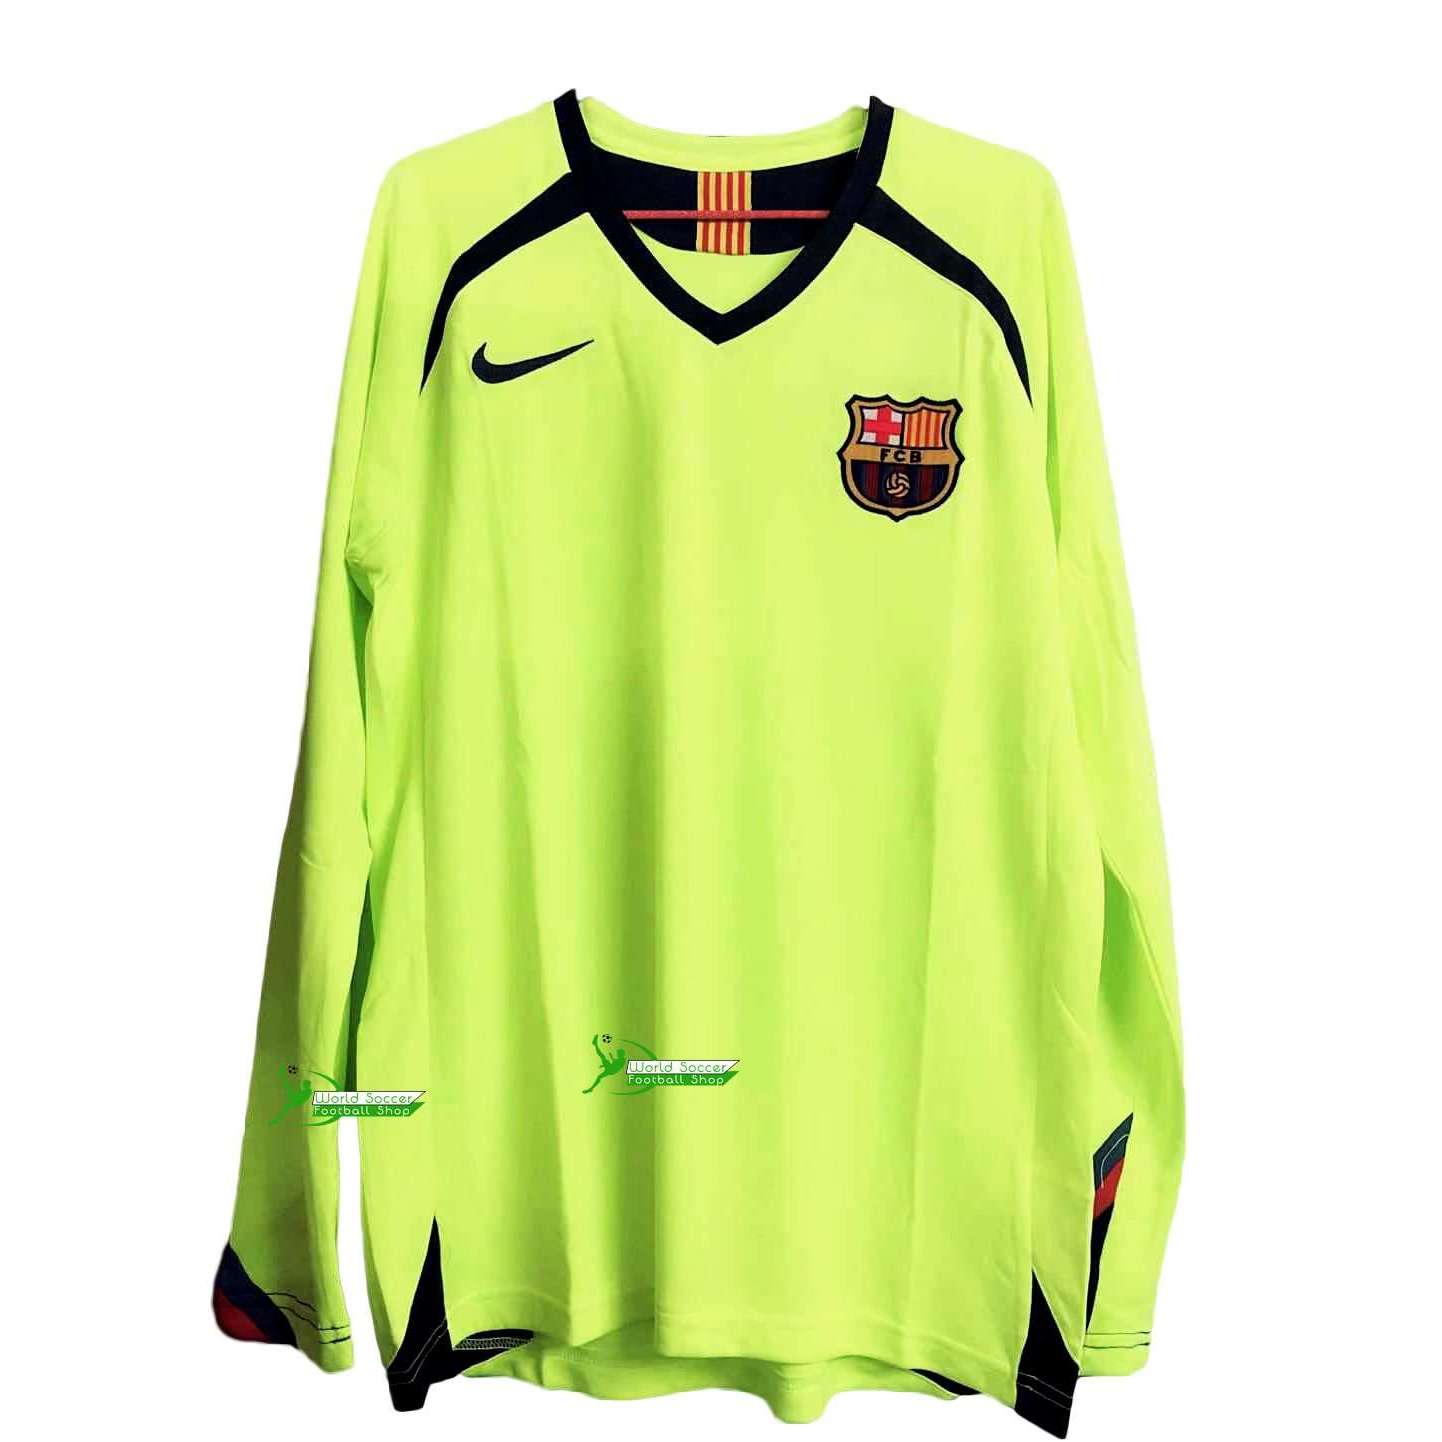 cheap fc barcelona jersey